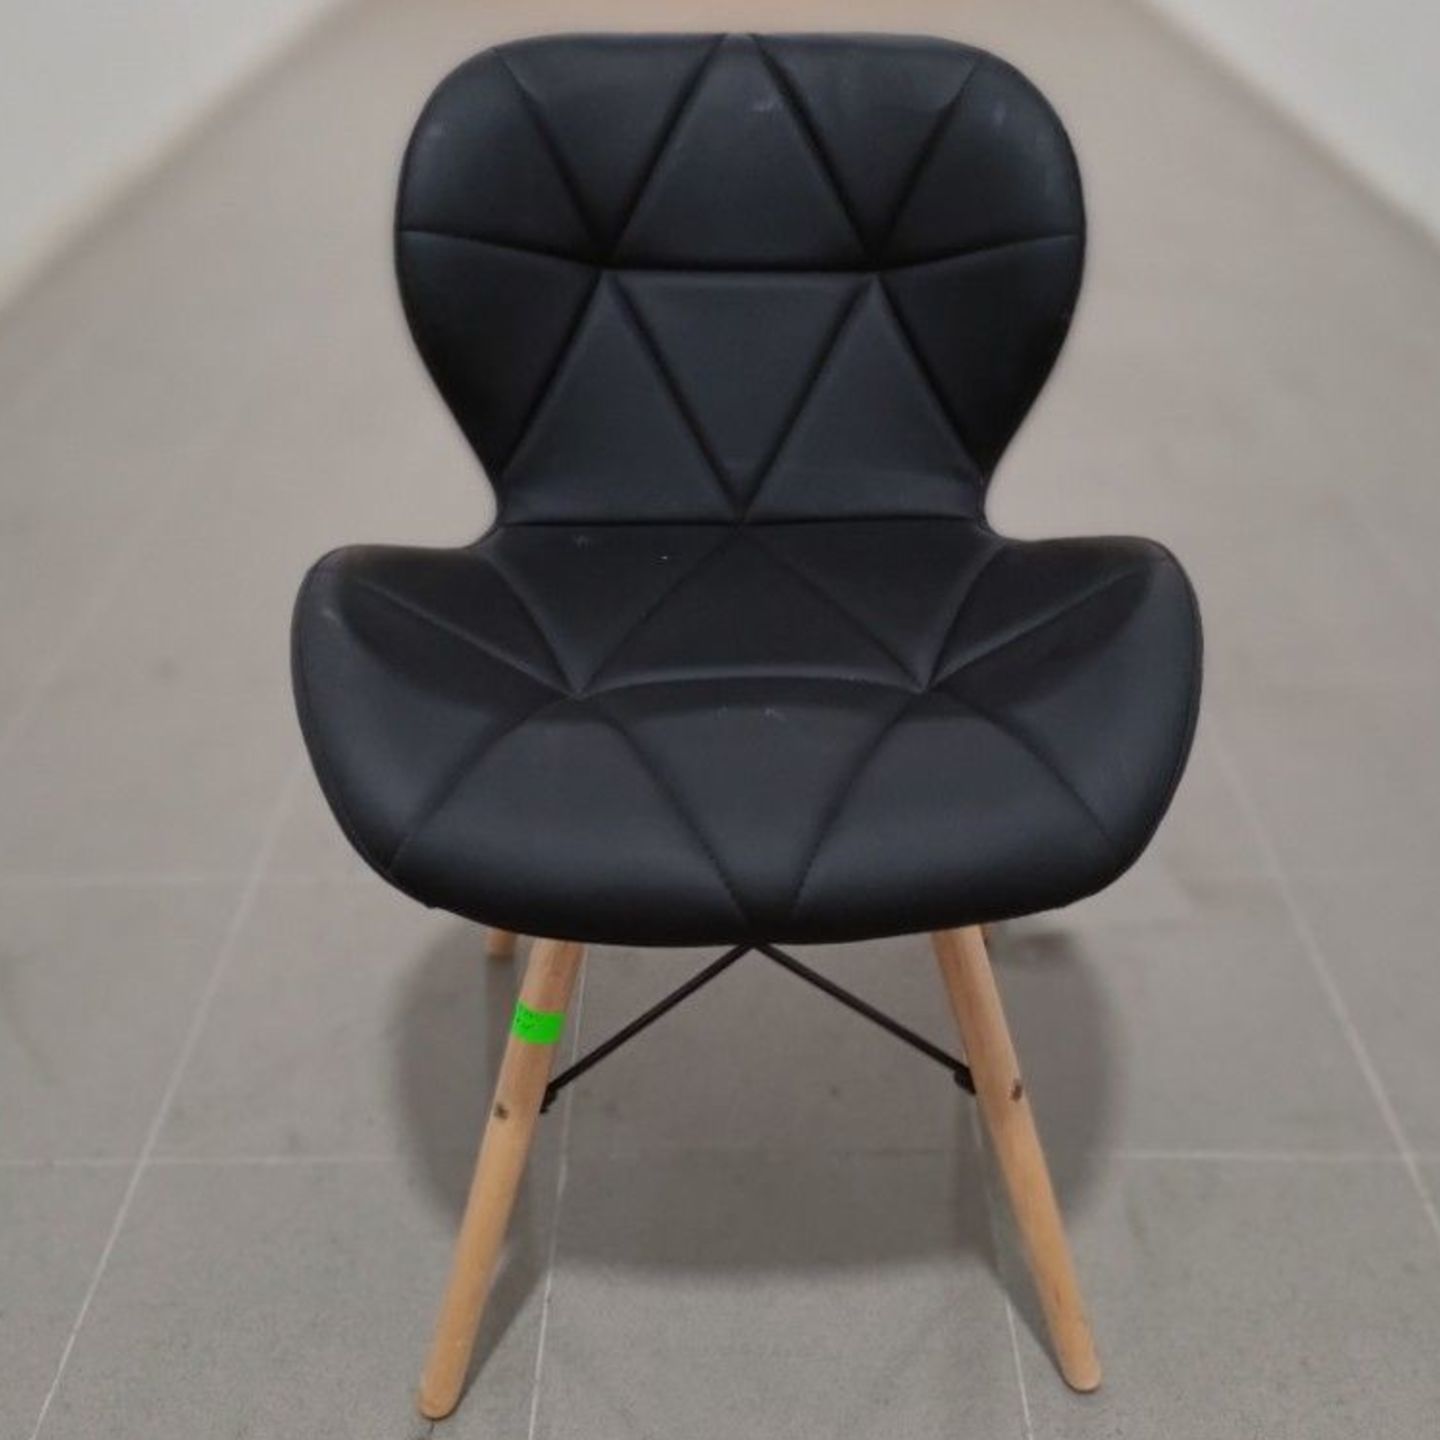 KYOCHI Chair in BLACK